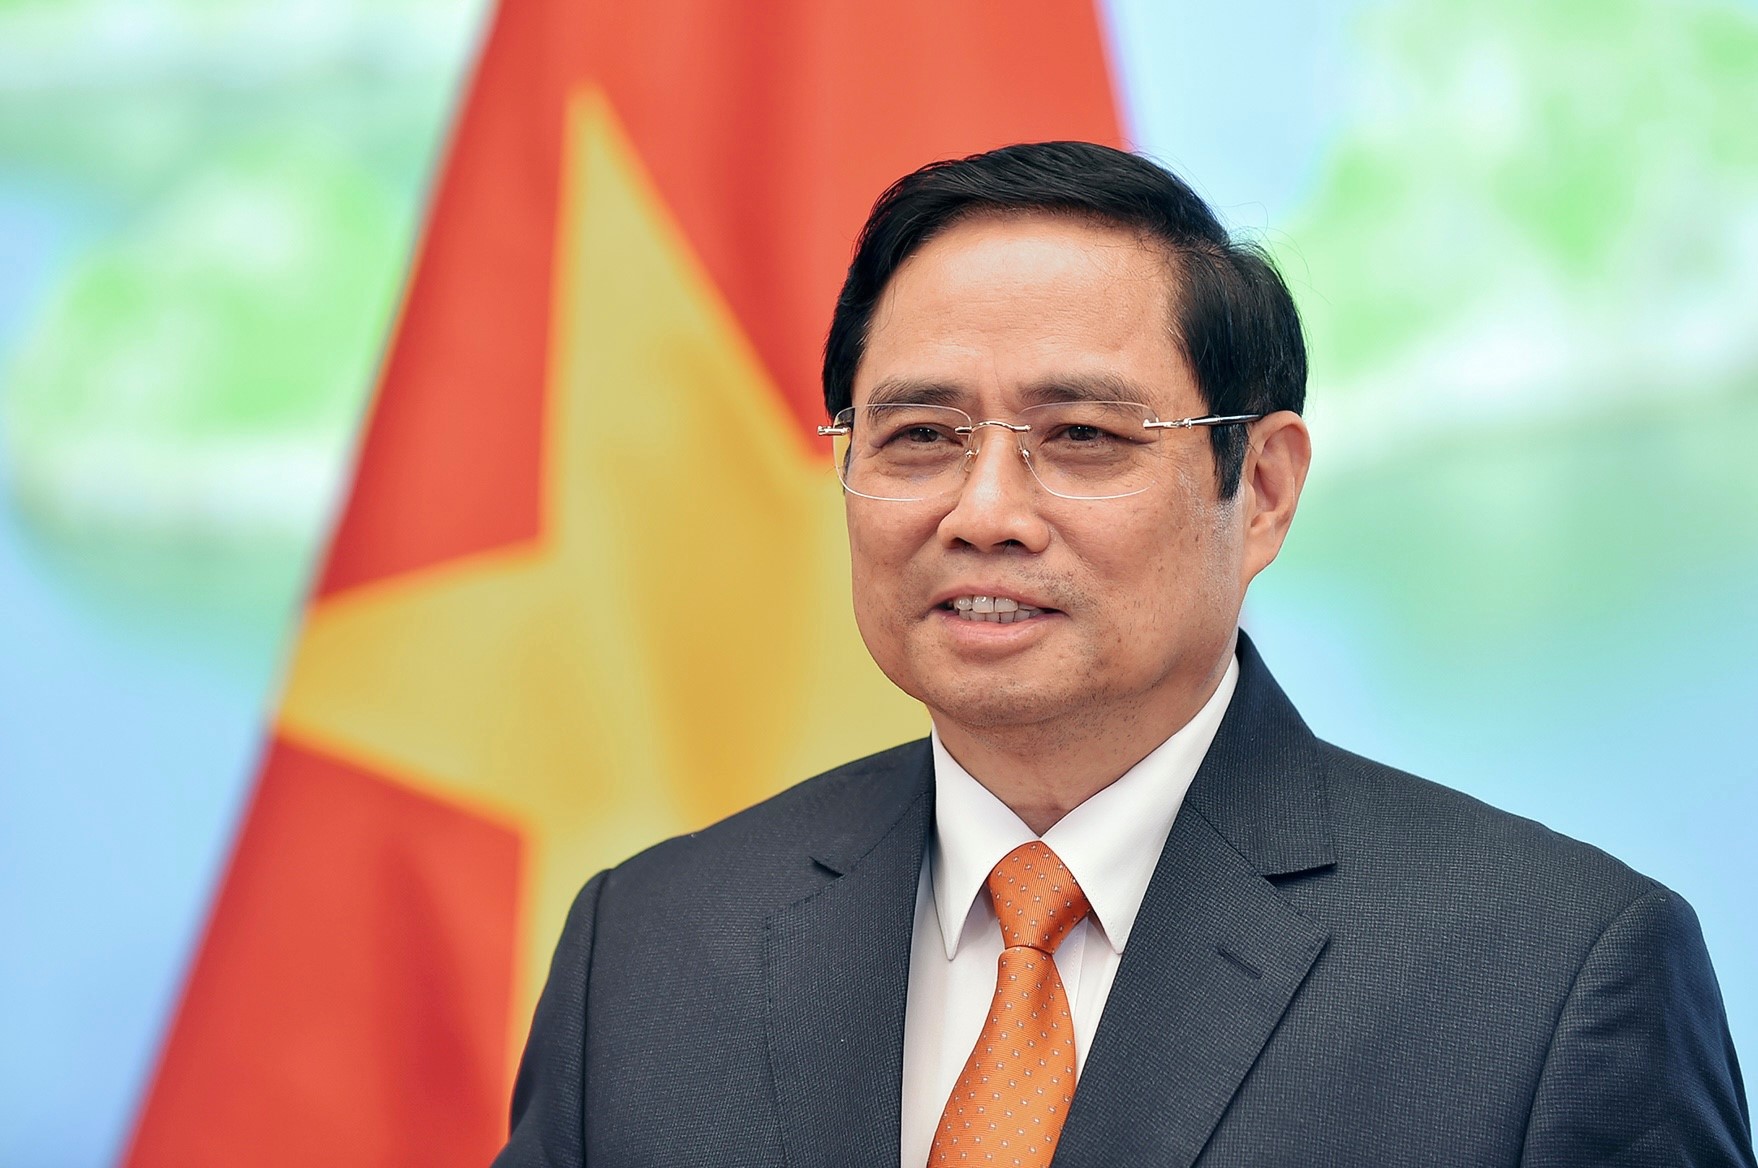 Photo: VGP (Viet Nam Government Portal) / Nhat Bac